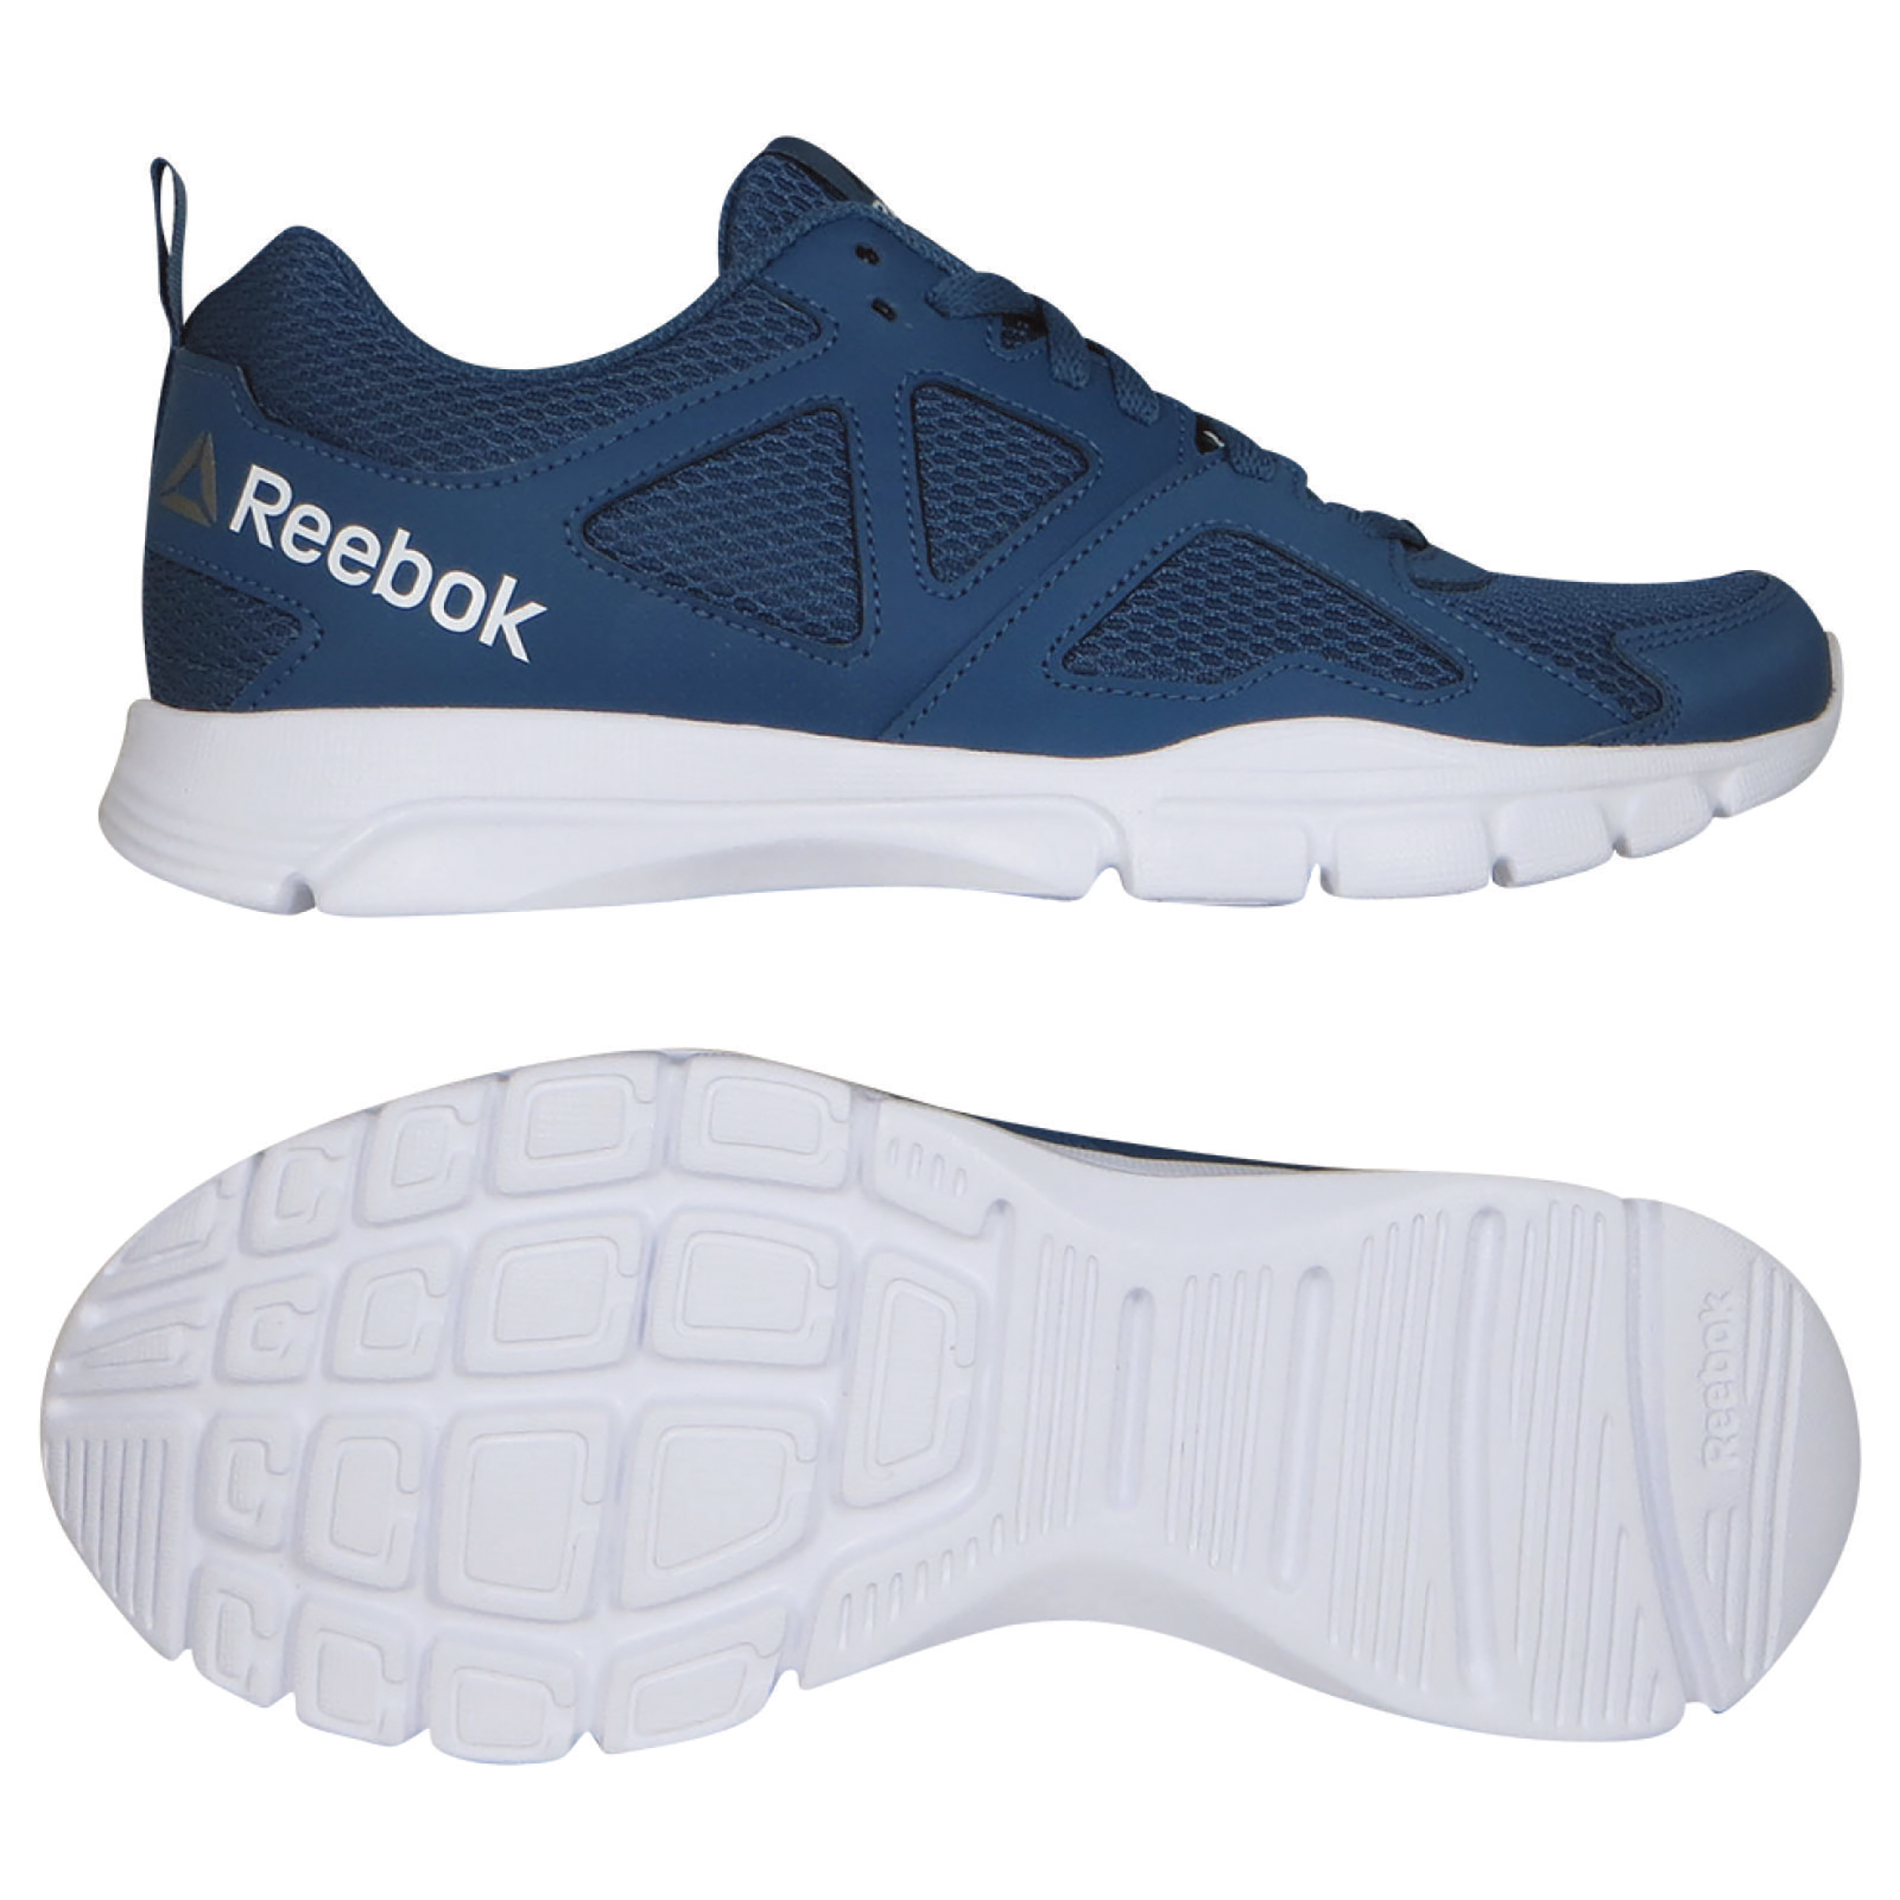 Reebok Men's Dash Train Blue Running Shoe